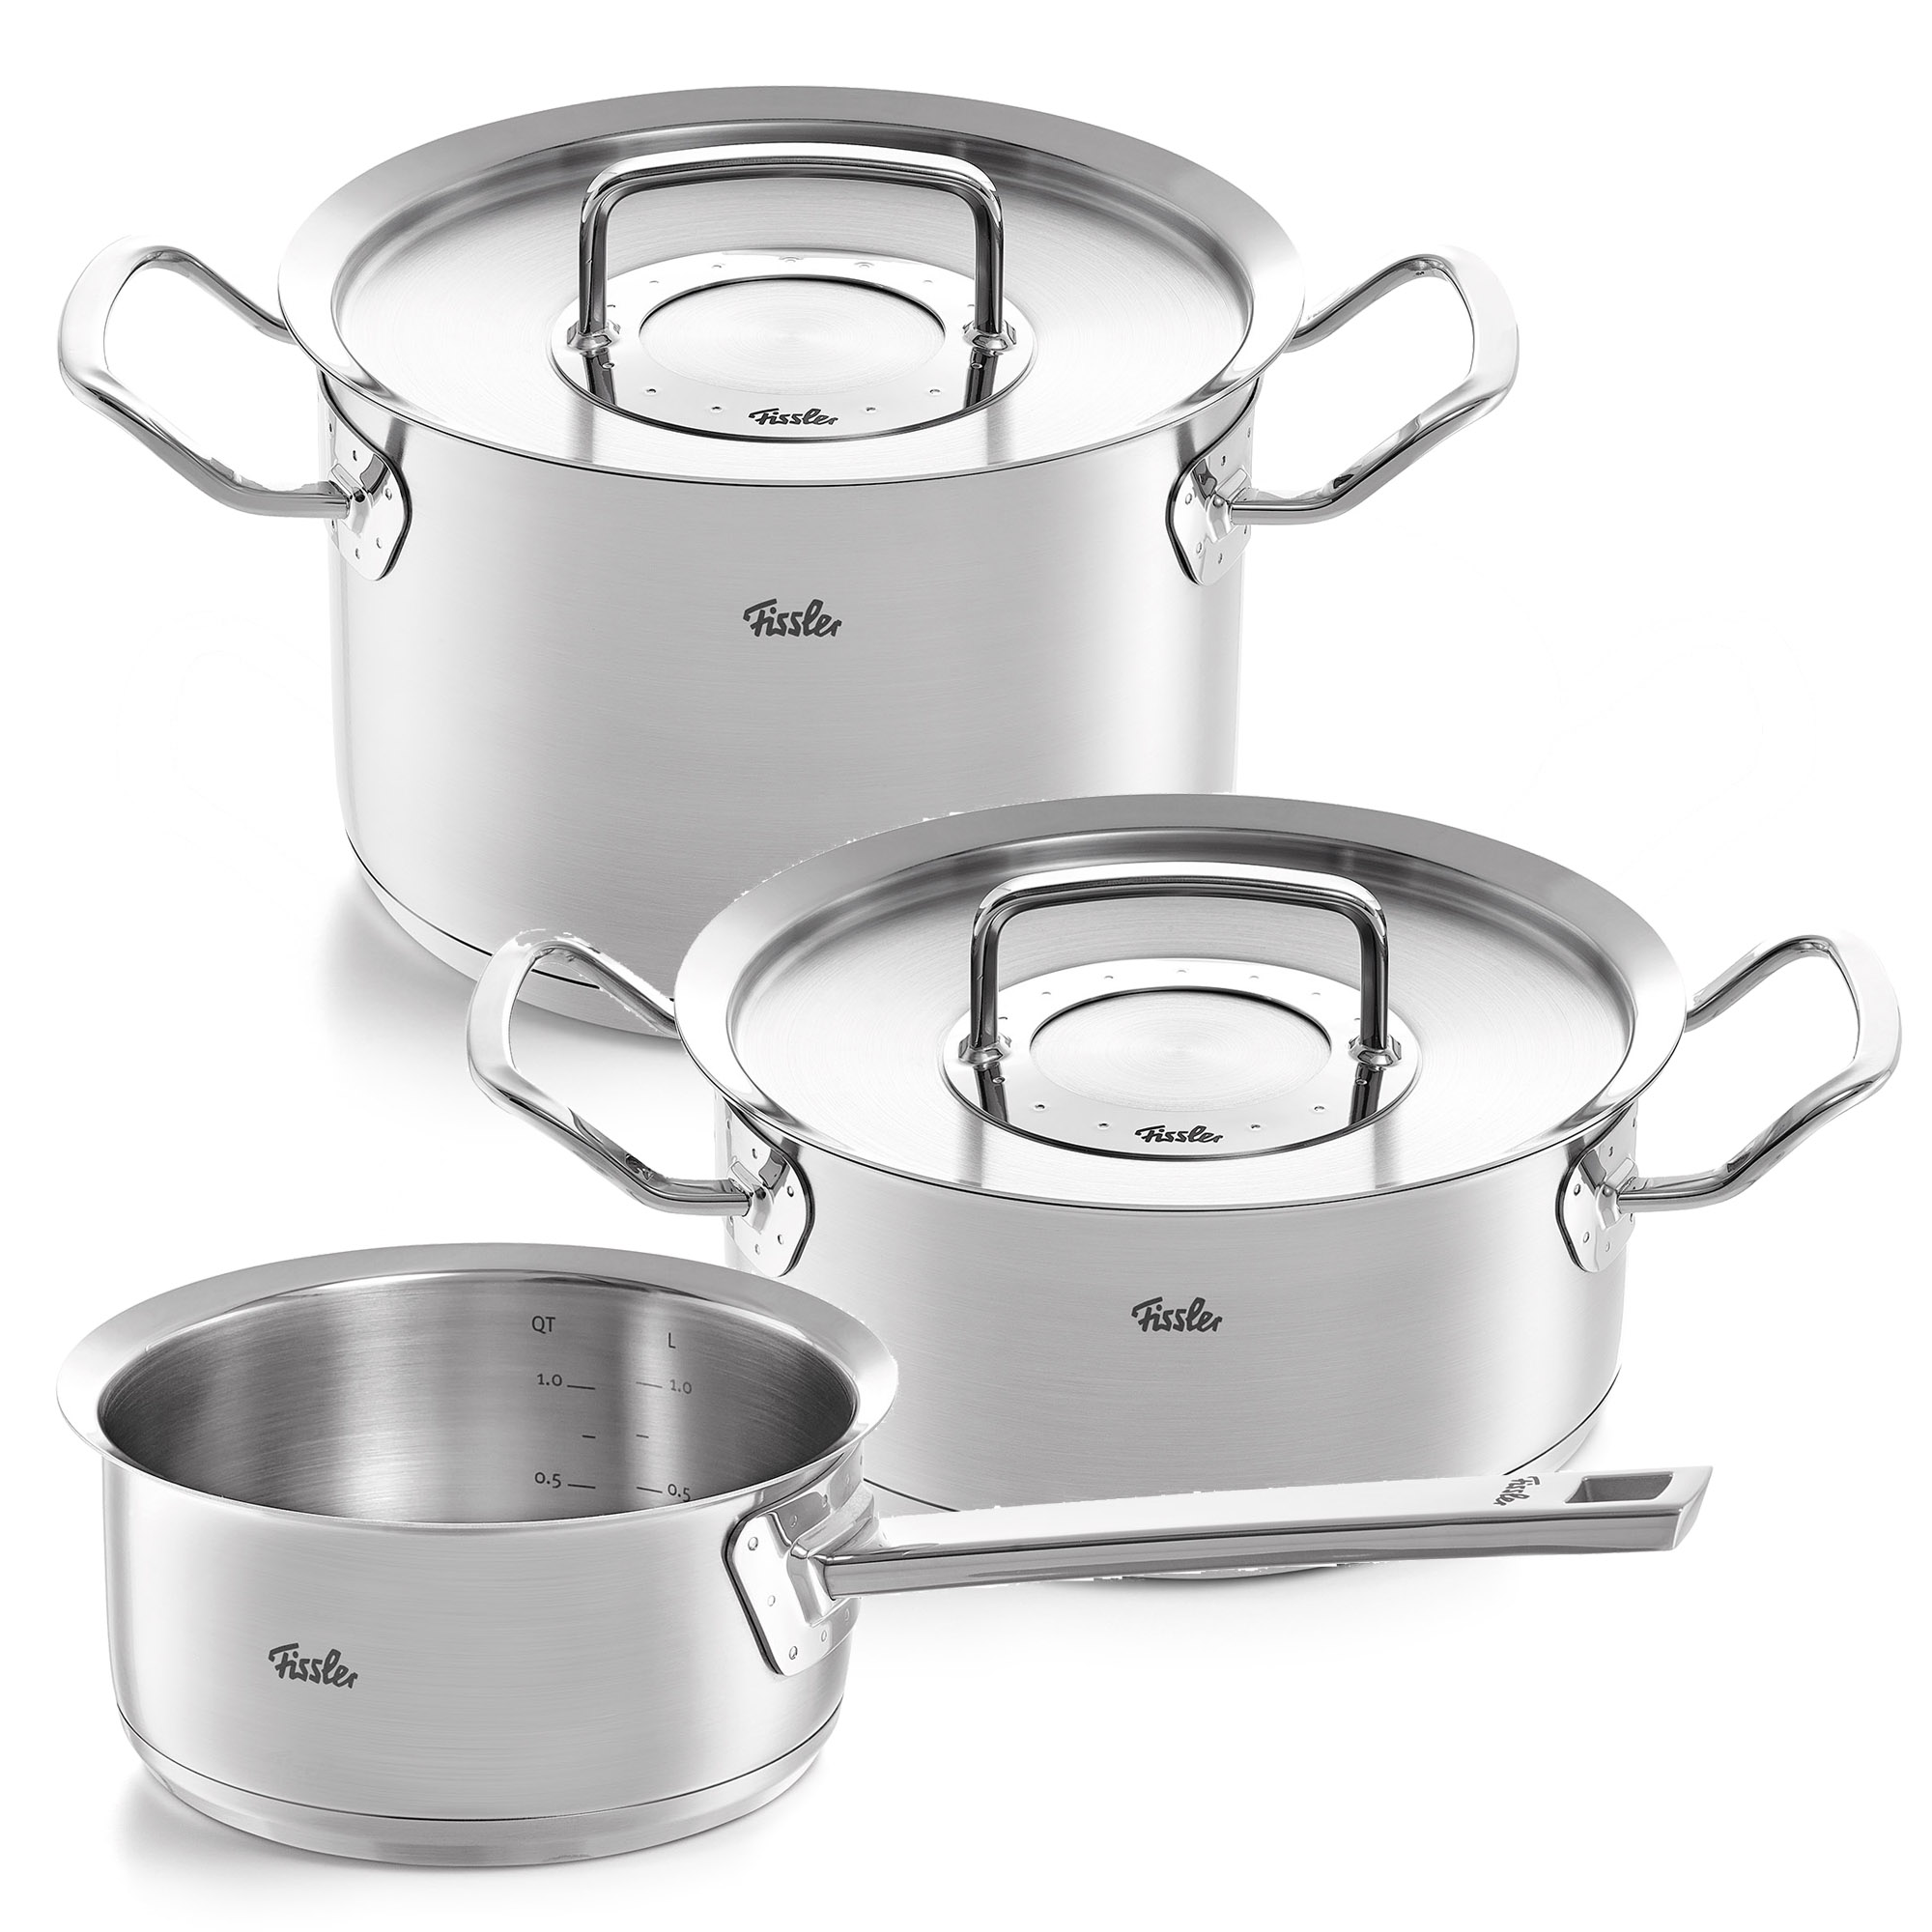 Englisch sets Original lid COOKING 1a-Neuware Cooking set BAKING Profi Collection cookware with | Cookware | 3-piece & FISSLER | | metal